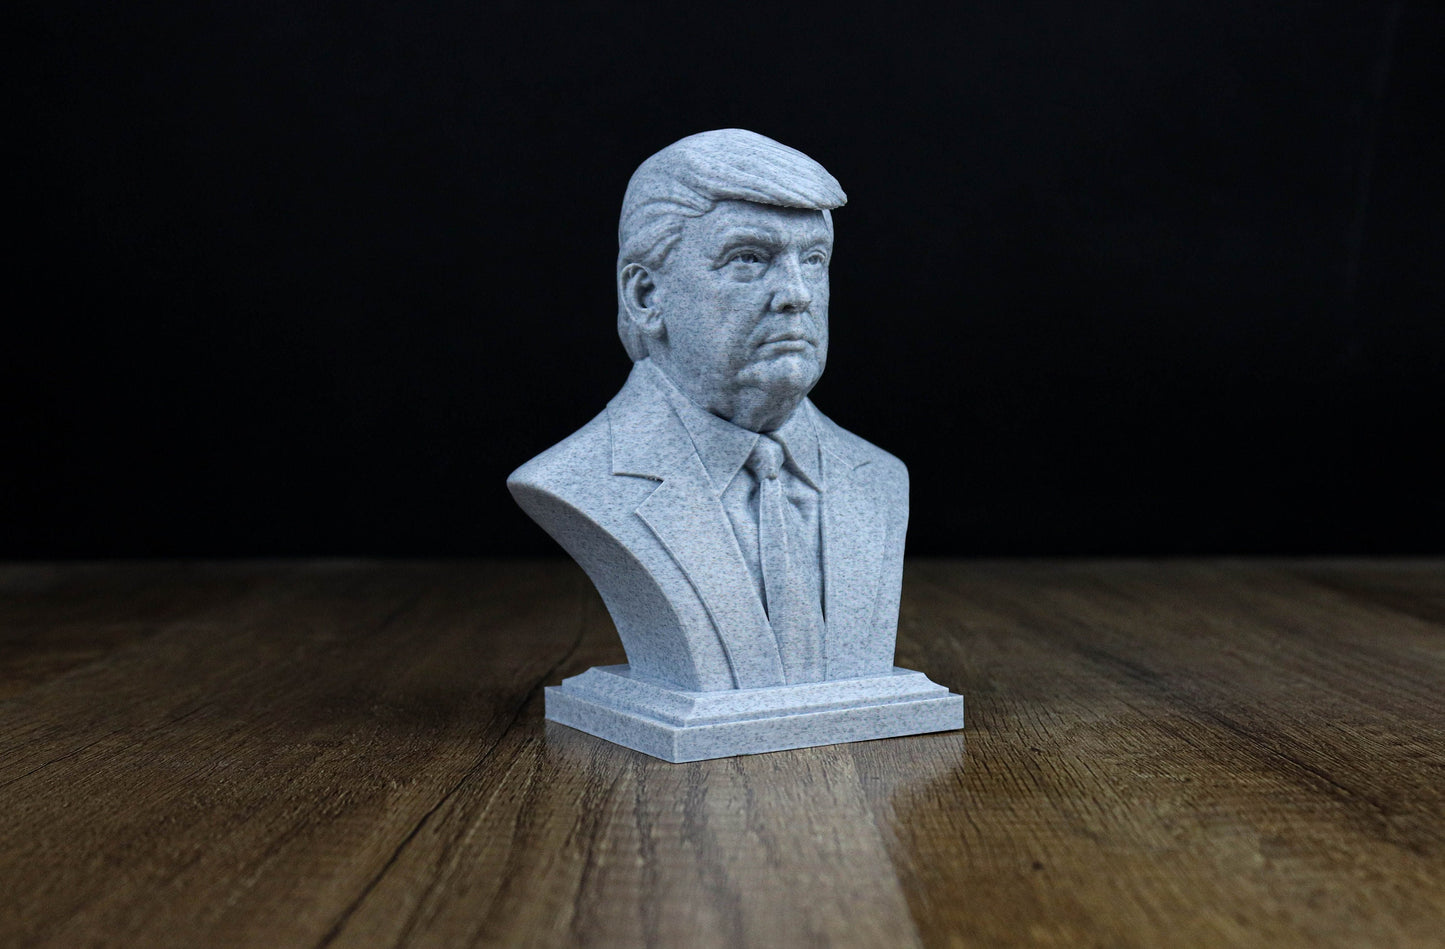 Donald Trump Bust, 45th American President Sculpture